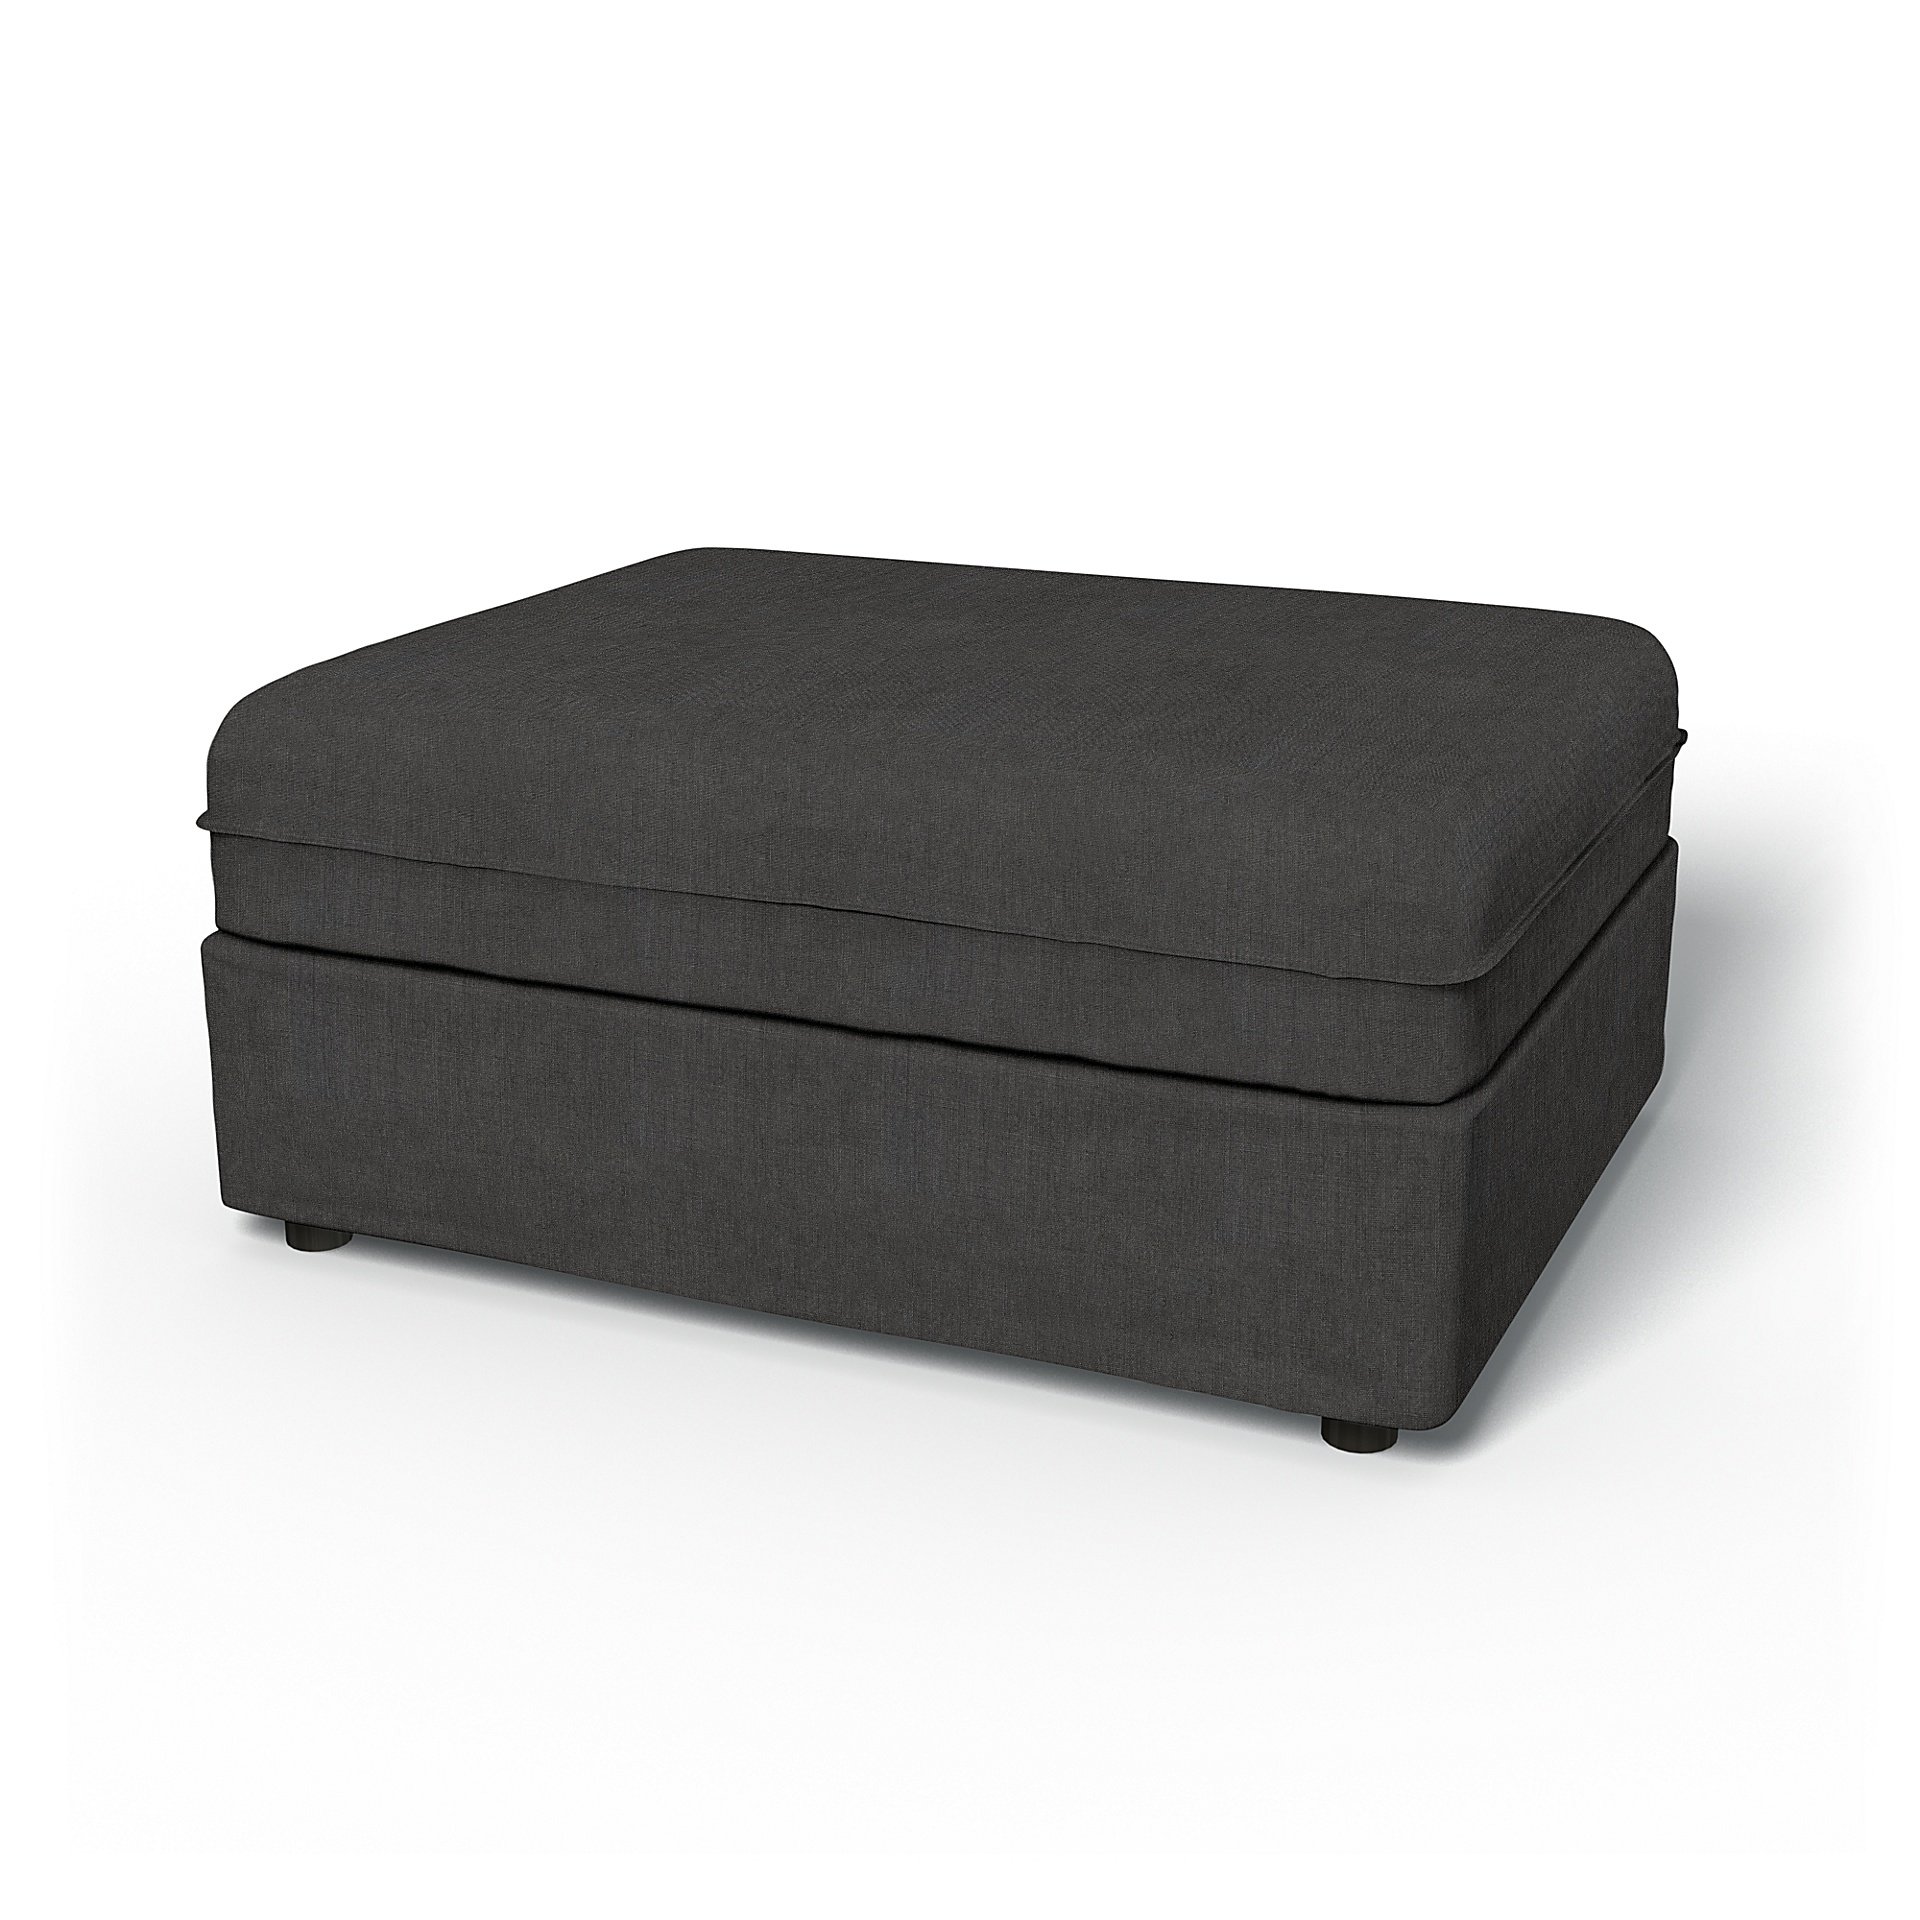 IKEA - Vallentuna Seat Module Cover 100x80cm 39x32in, Espresso, Linen - Bemz